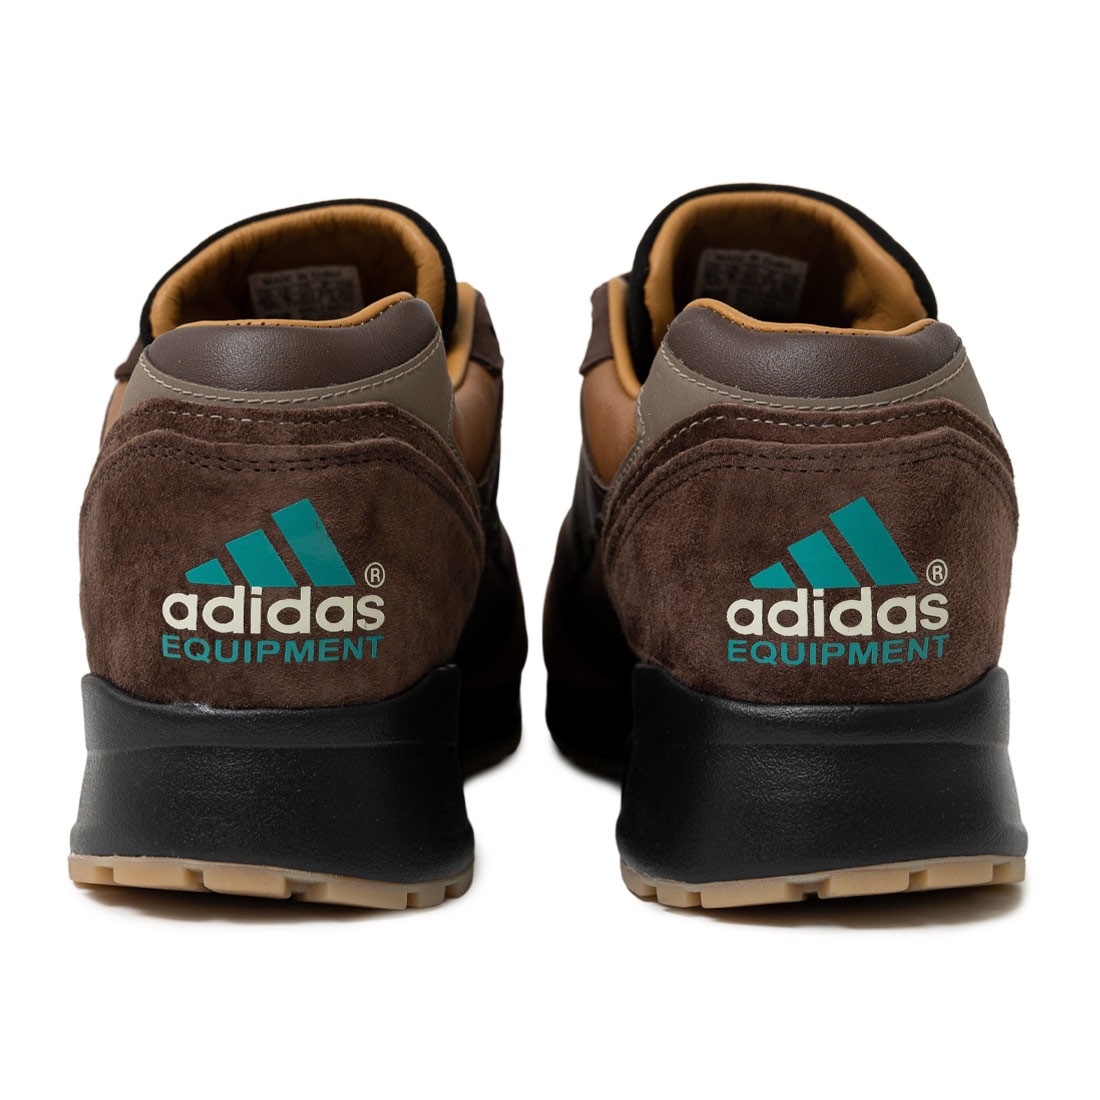 Adidas Equipment CSG 91 W » Buy online now!